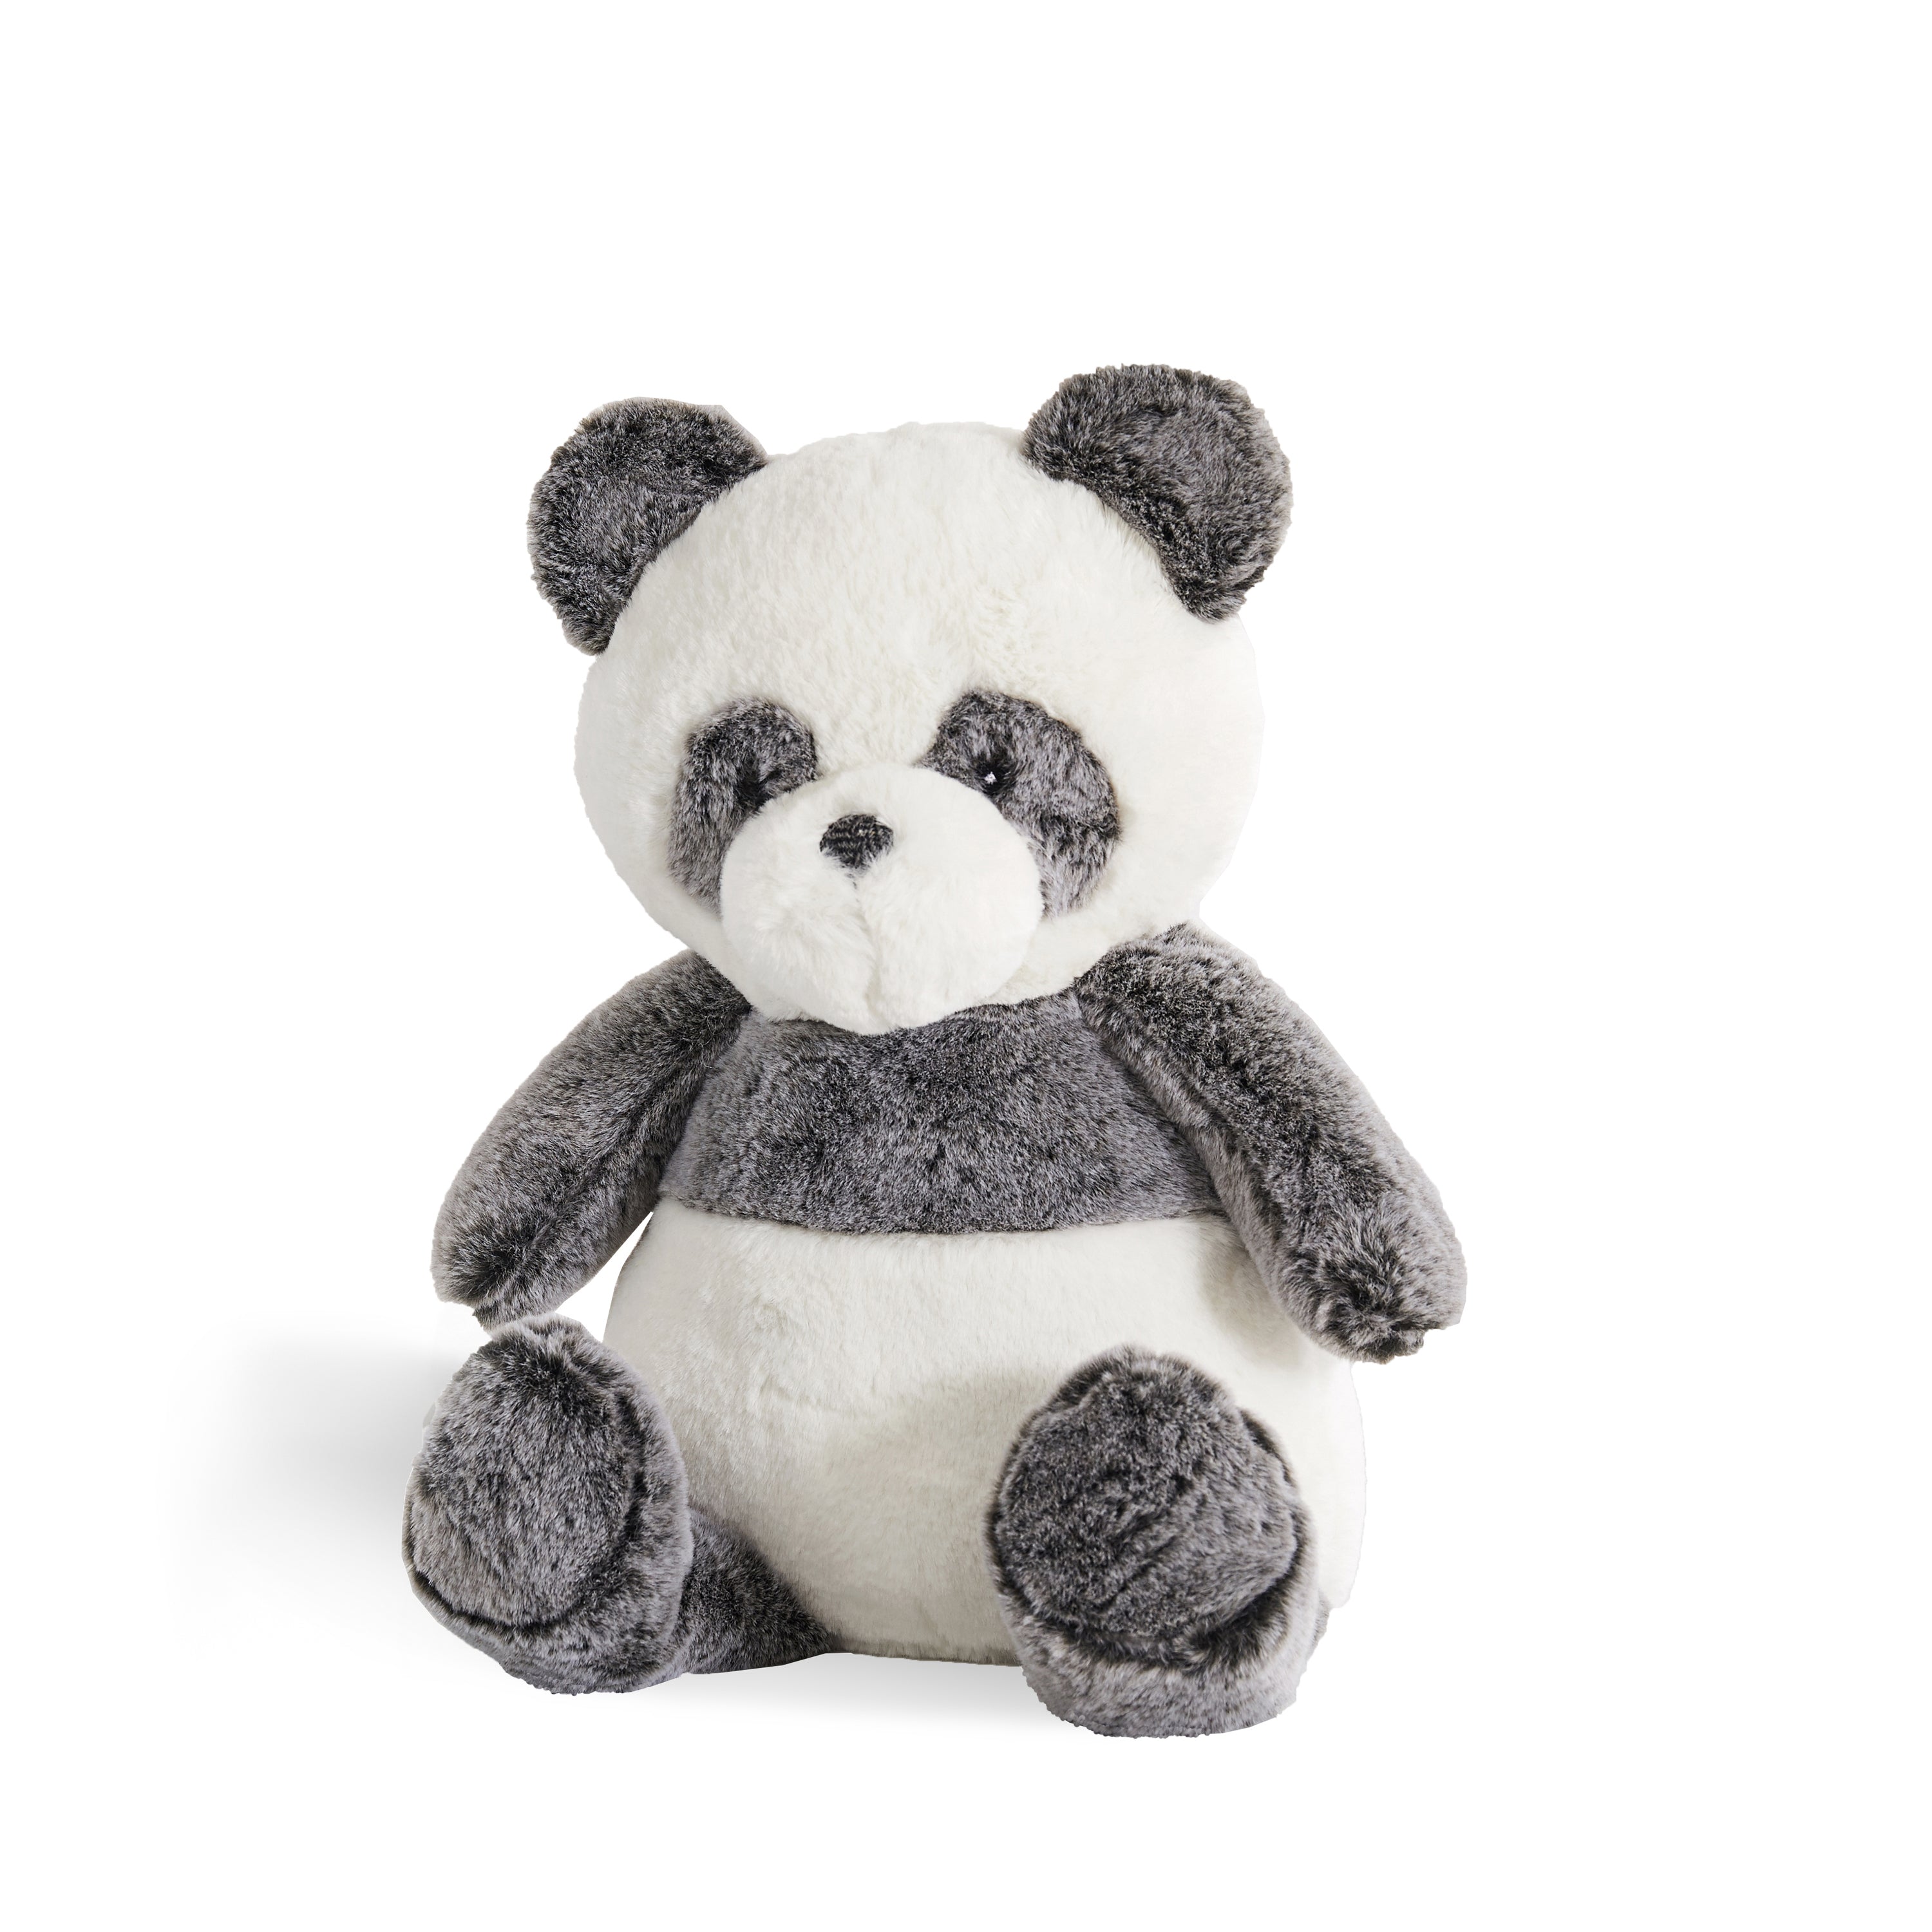 Mozambique Baby Plush Panda Toy